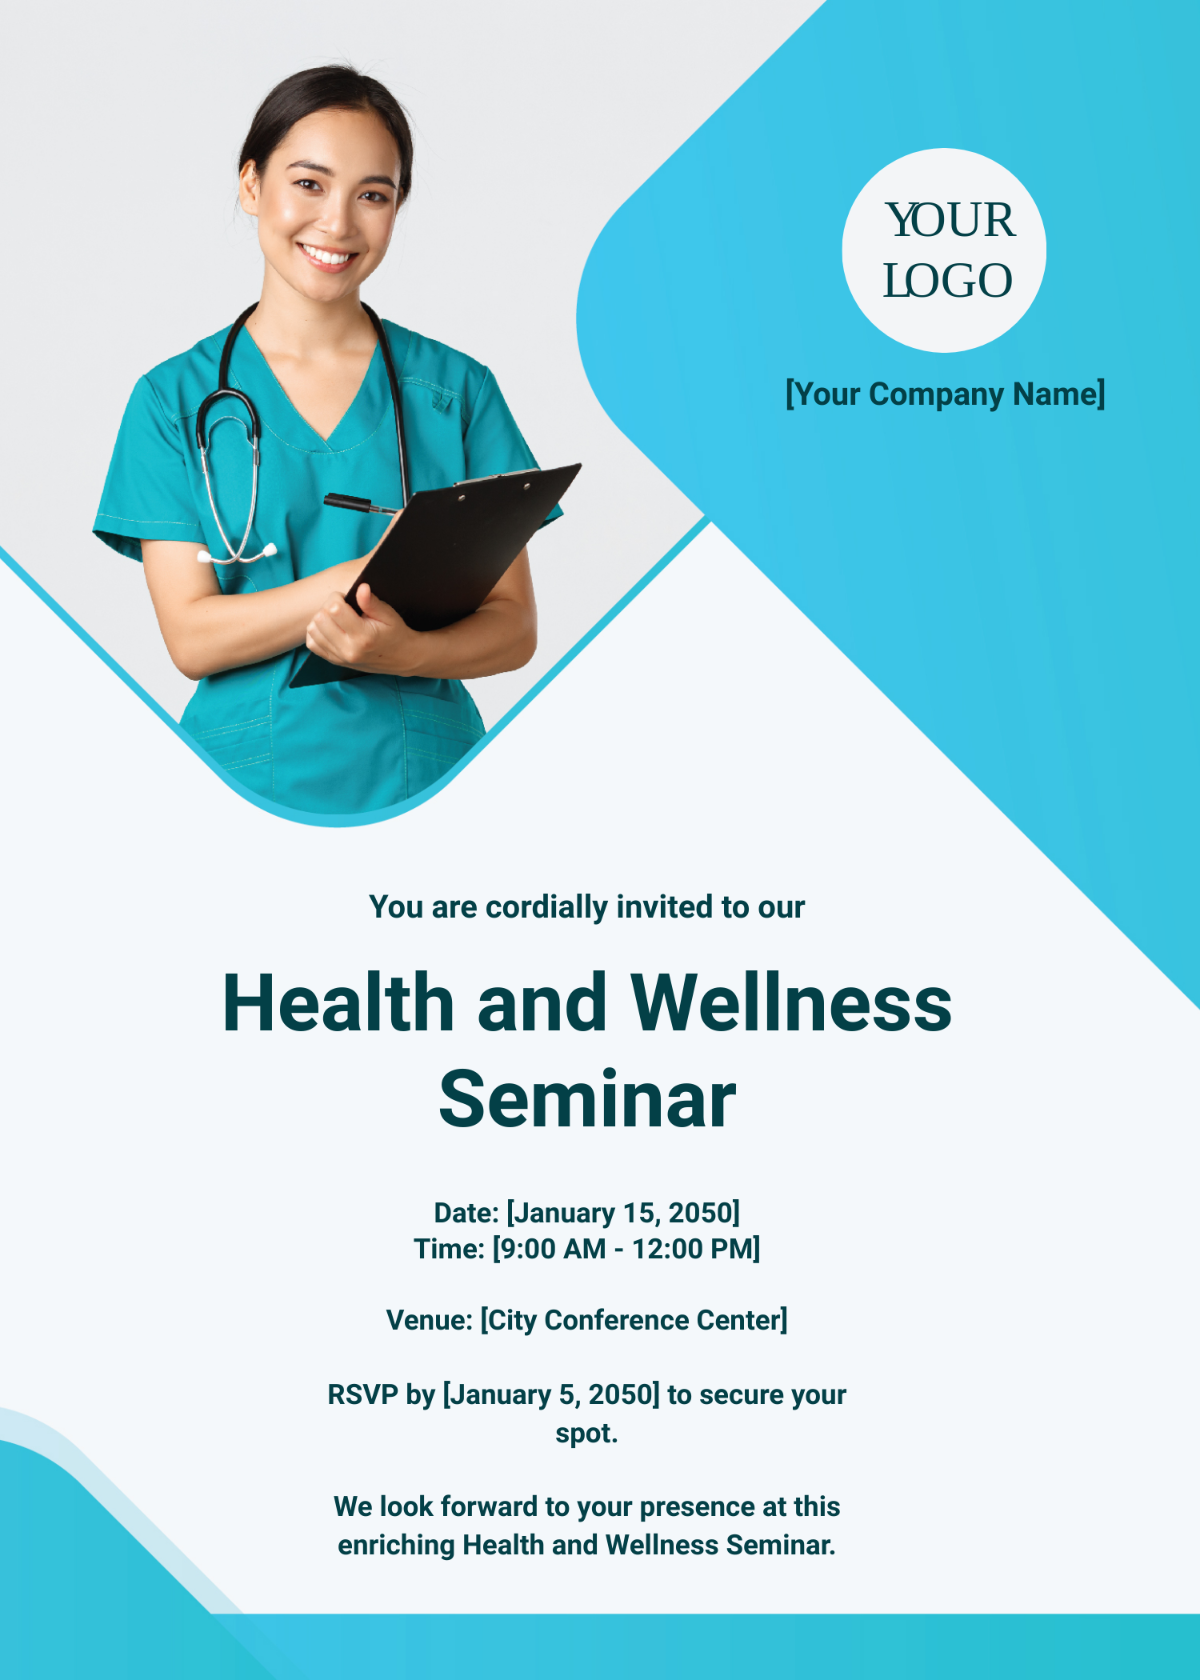 Health and Wellness Seminar Invitation Card Template